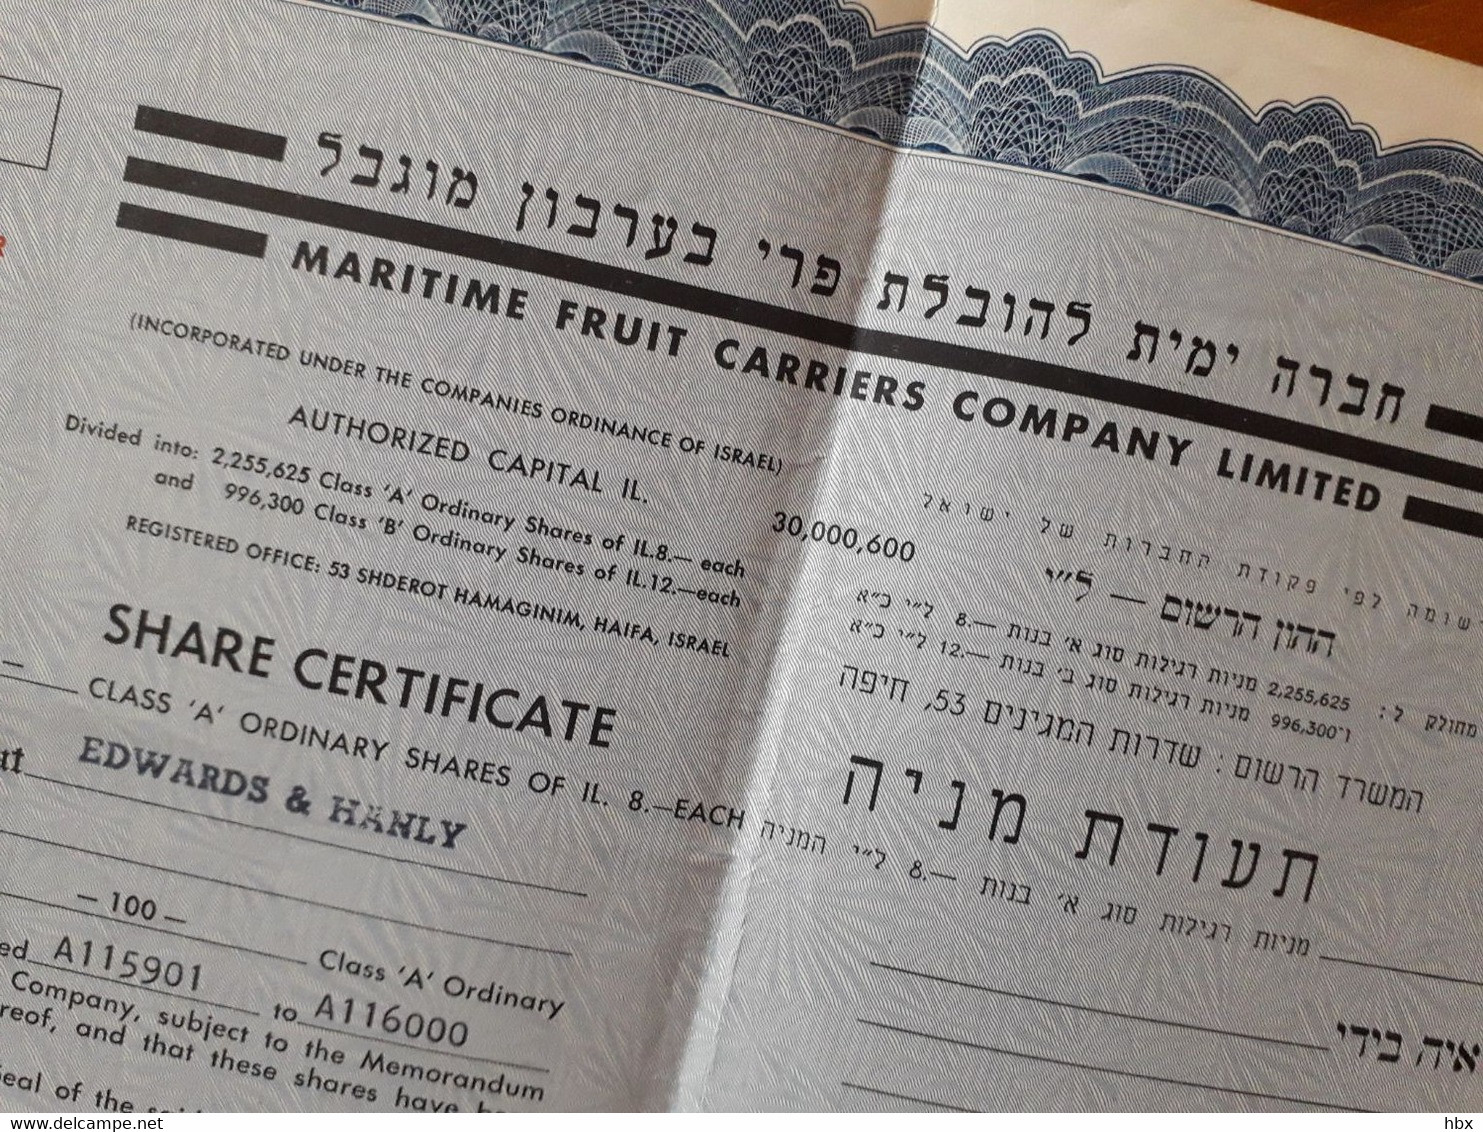 Israel: Maritime Fruit Carriers Company - 1969 - Navigation